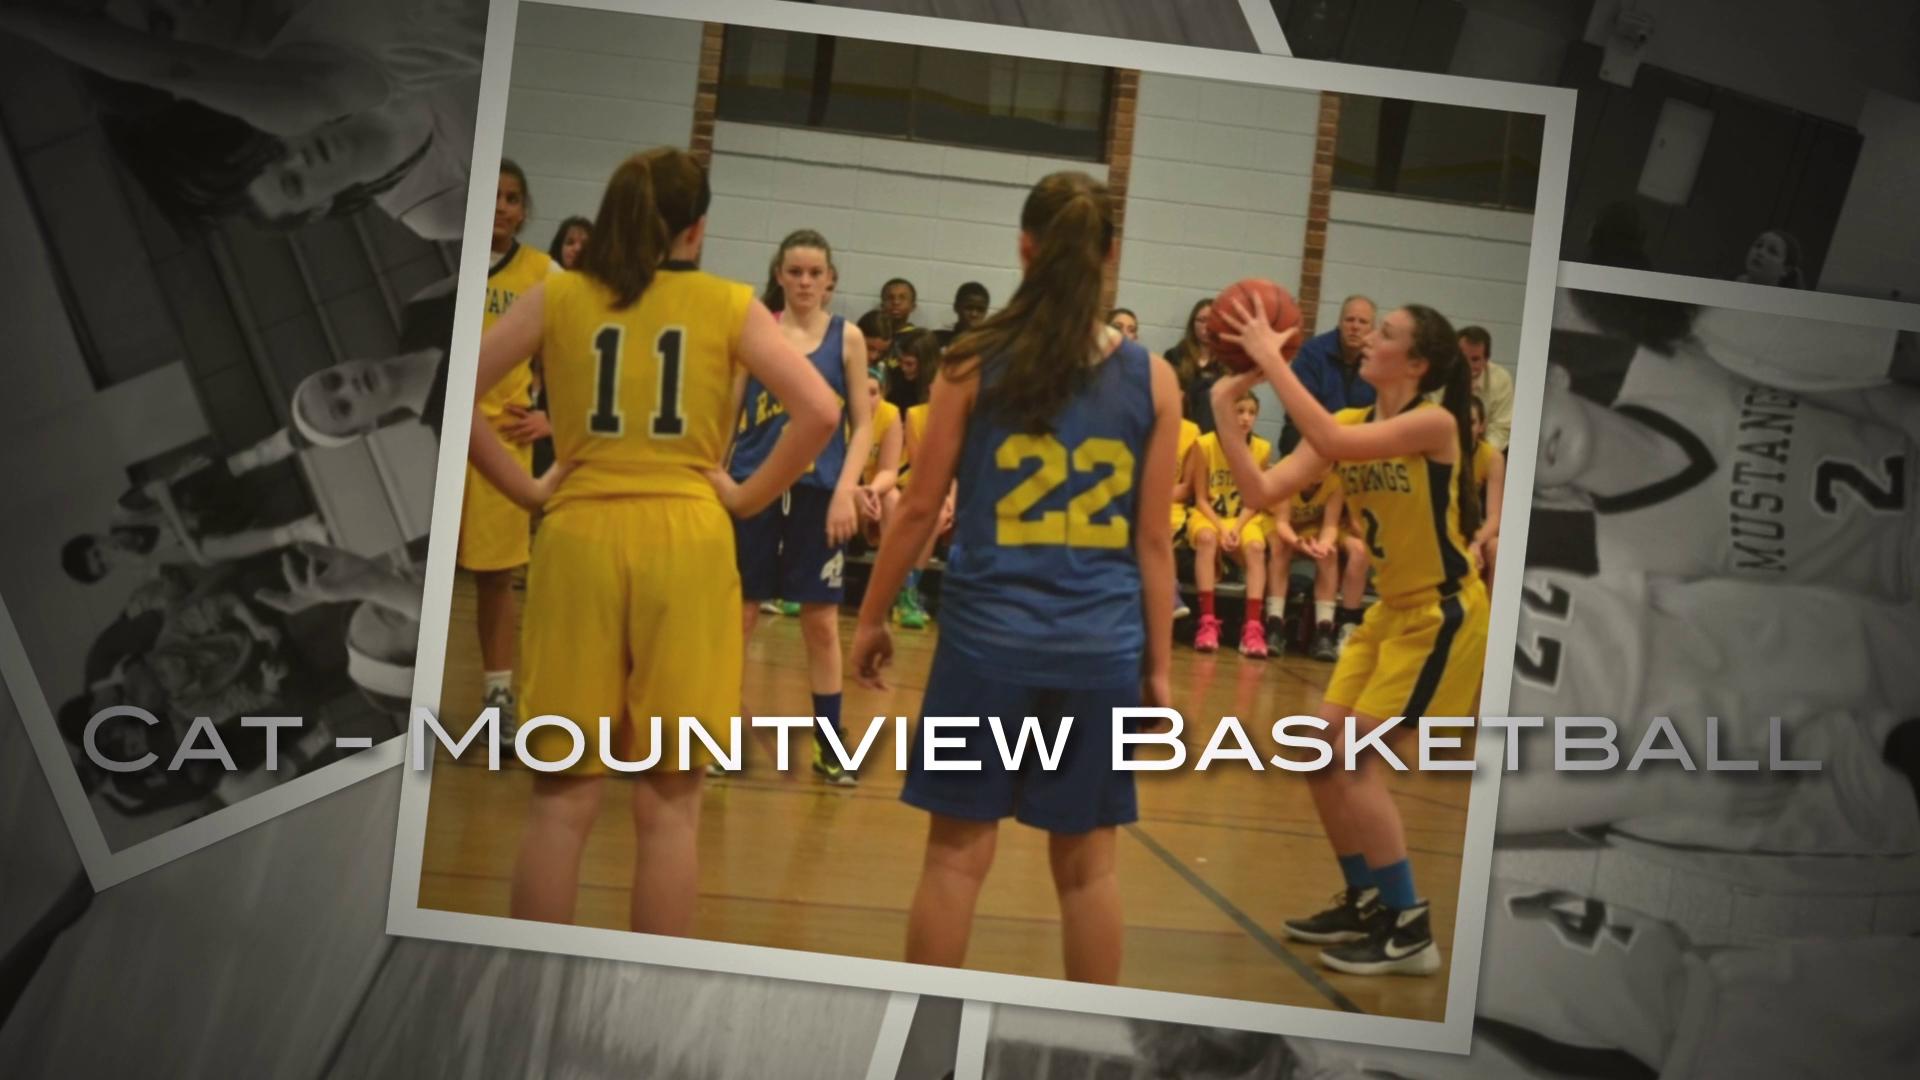 Cat - Mountview Basketball